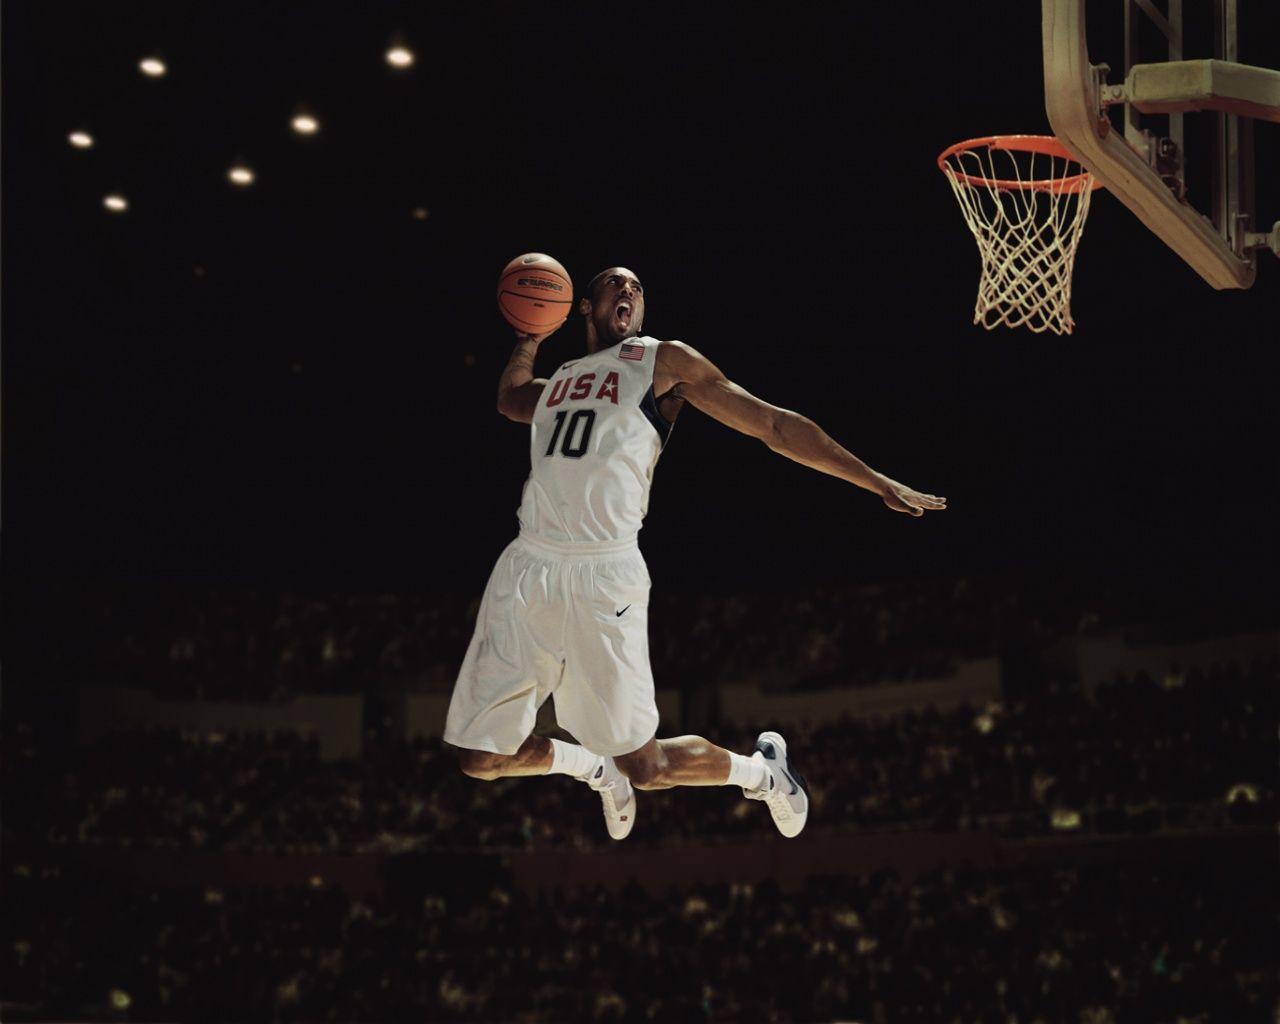 Wallpaper For > Nike Basketball iPhone Wallpaper